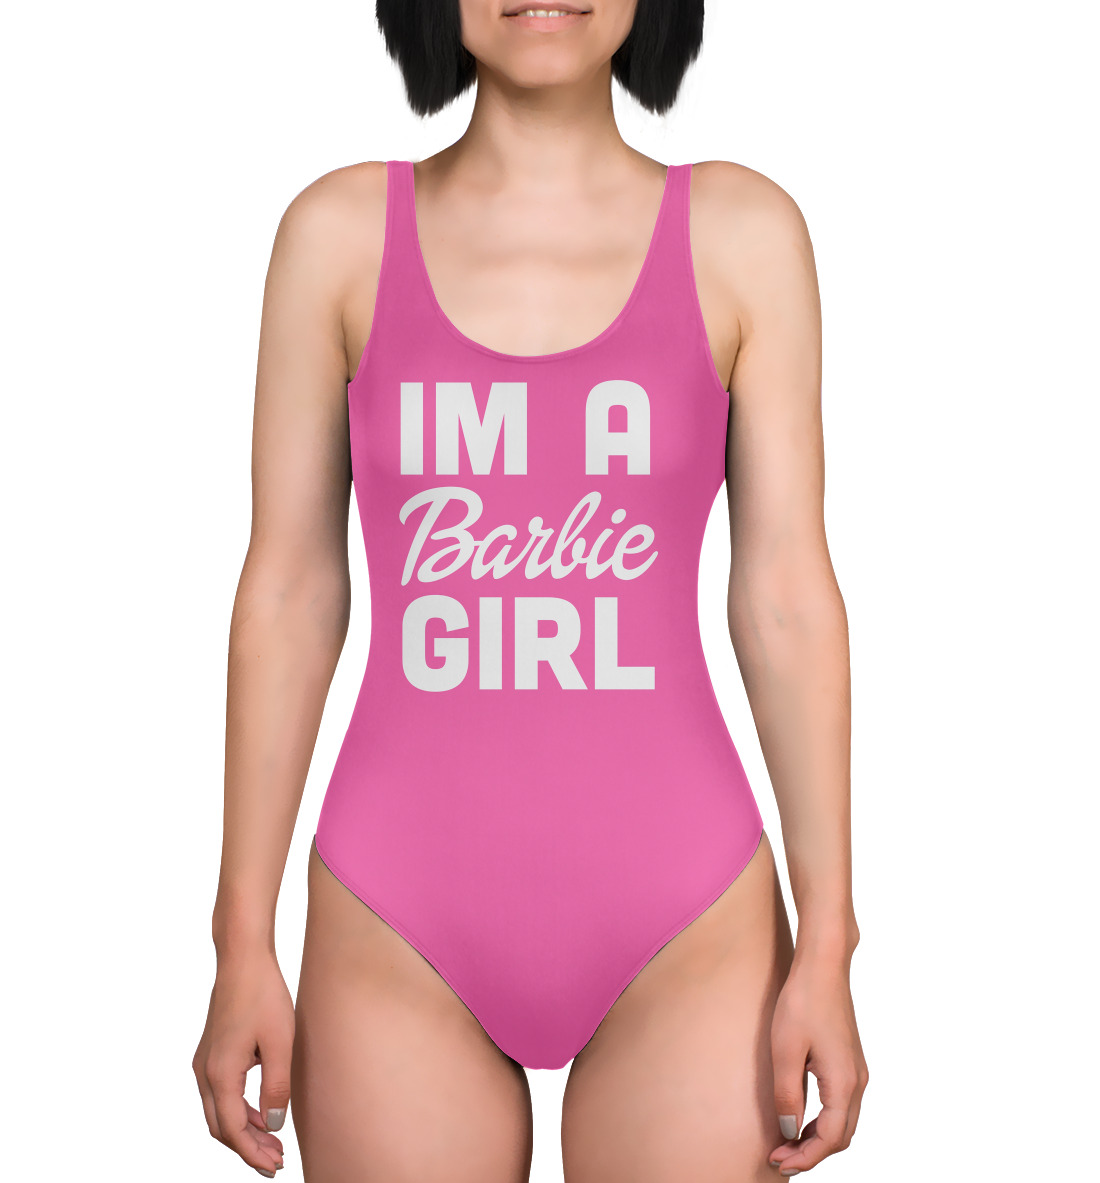 

IM A Barbie GIRL